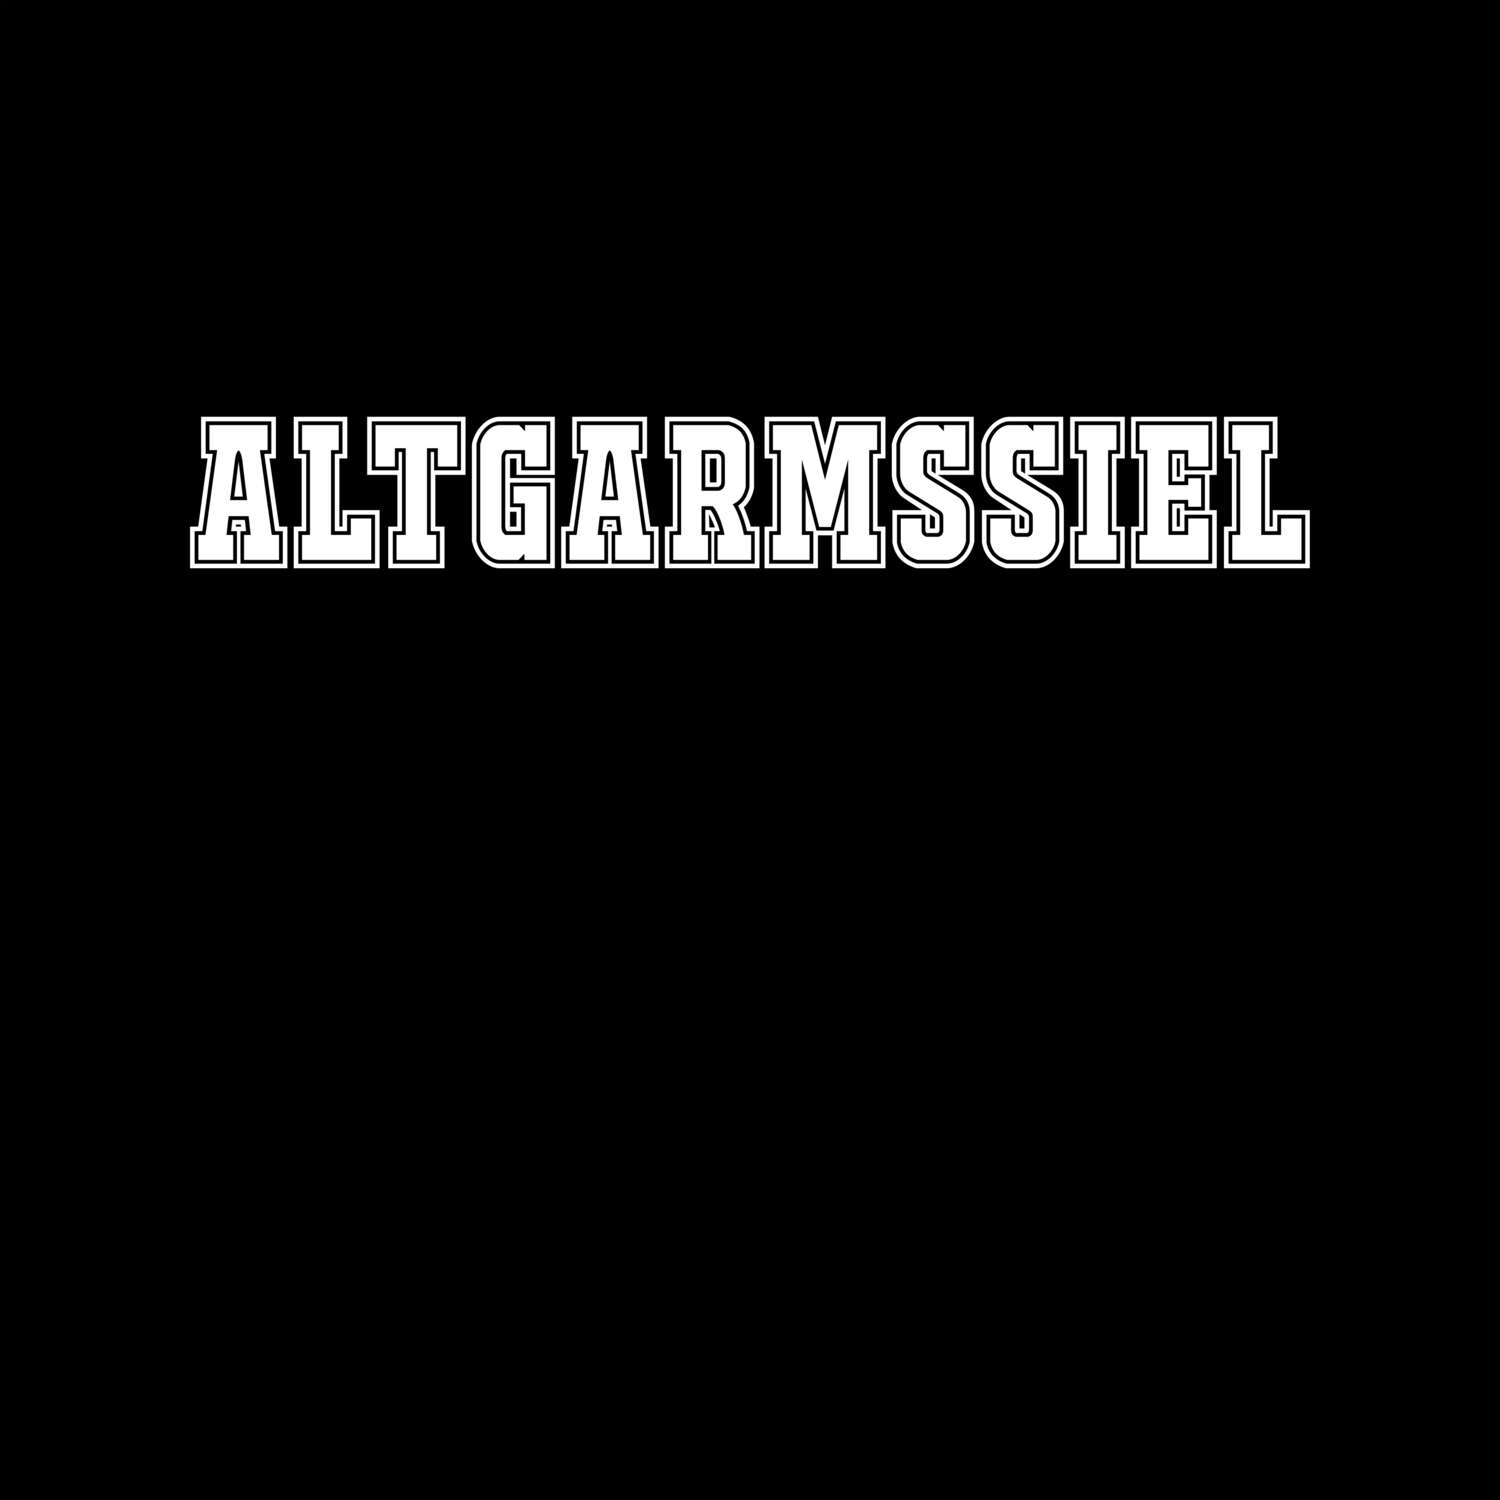 Altgarmssiel T-Shirt »Classic«